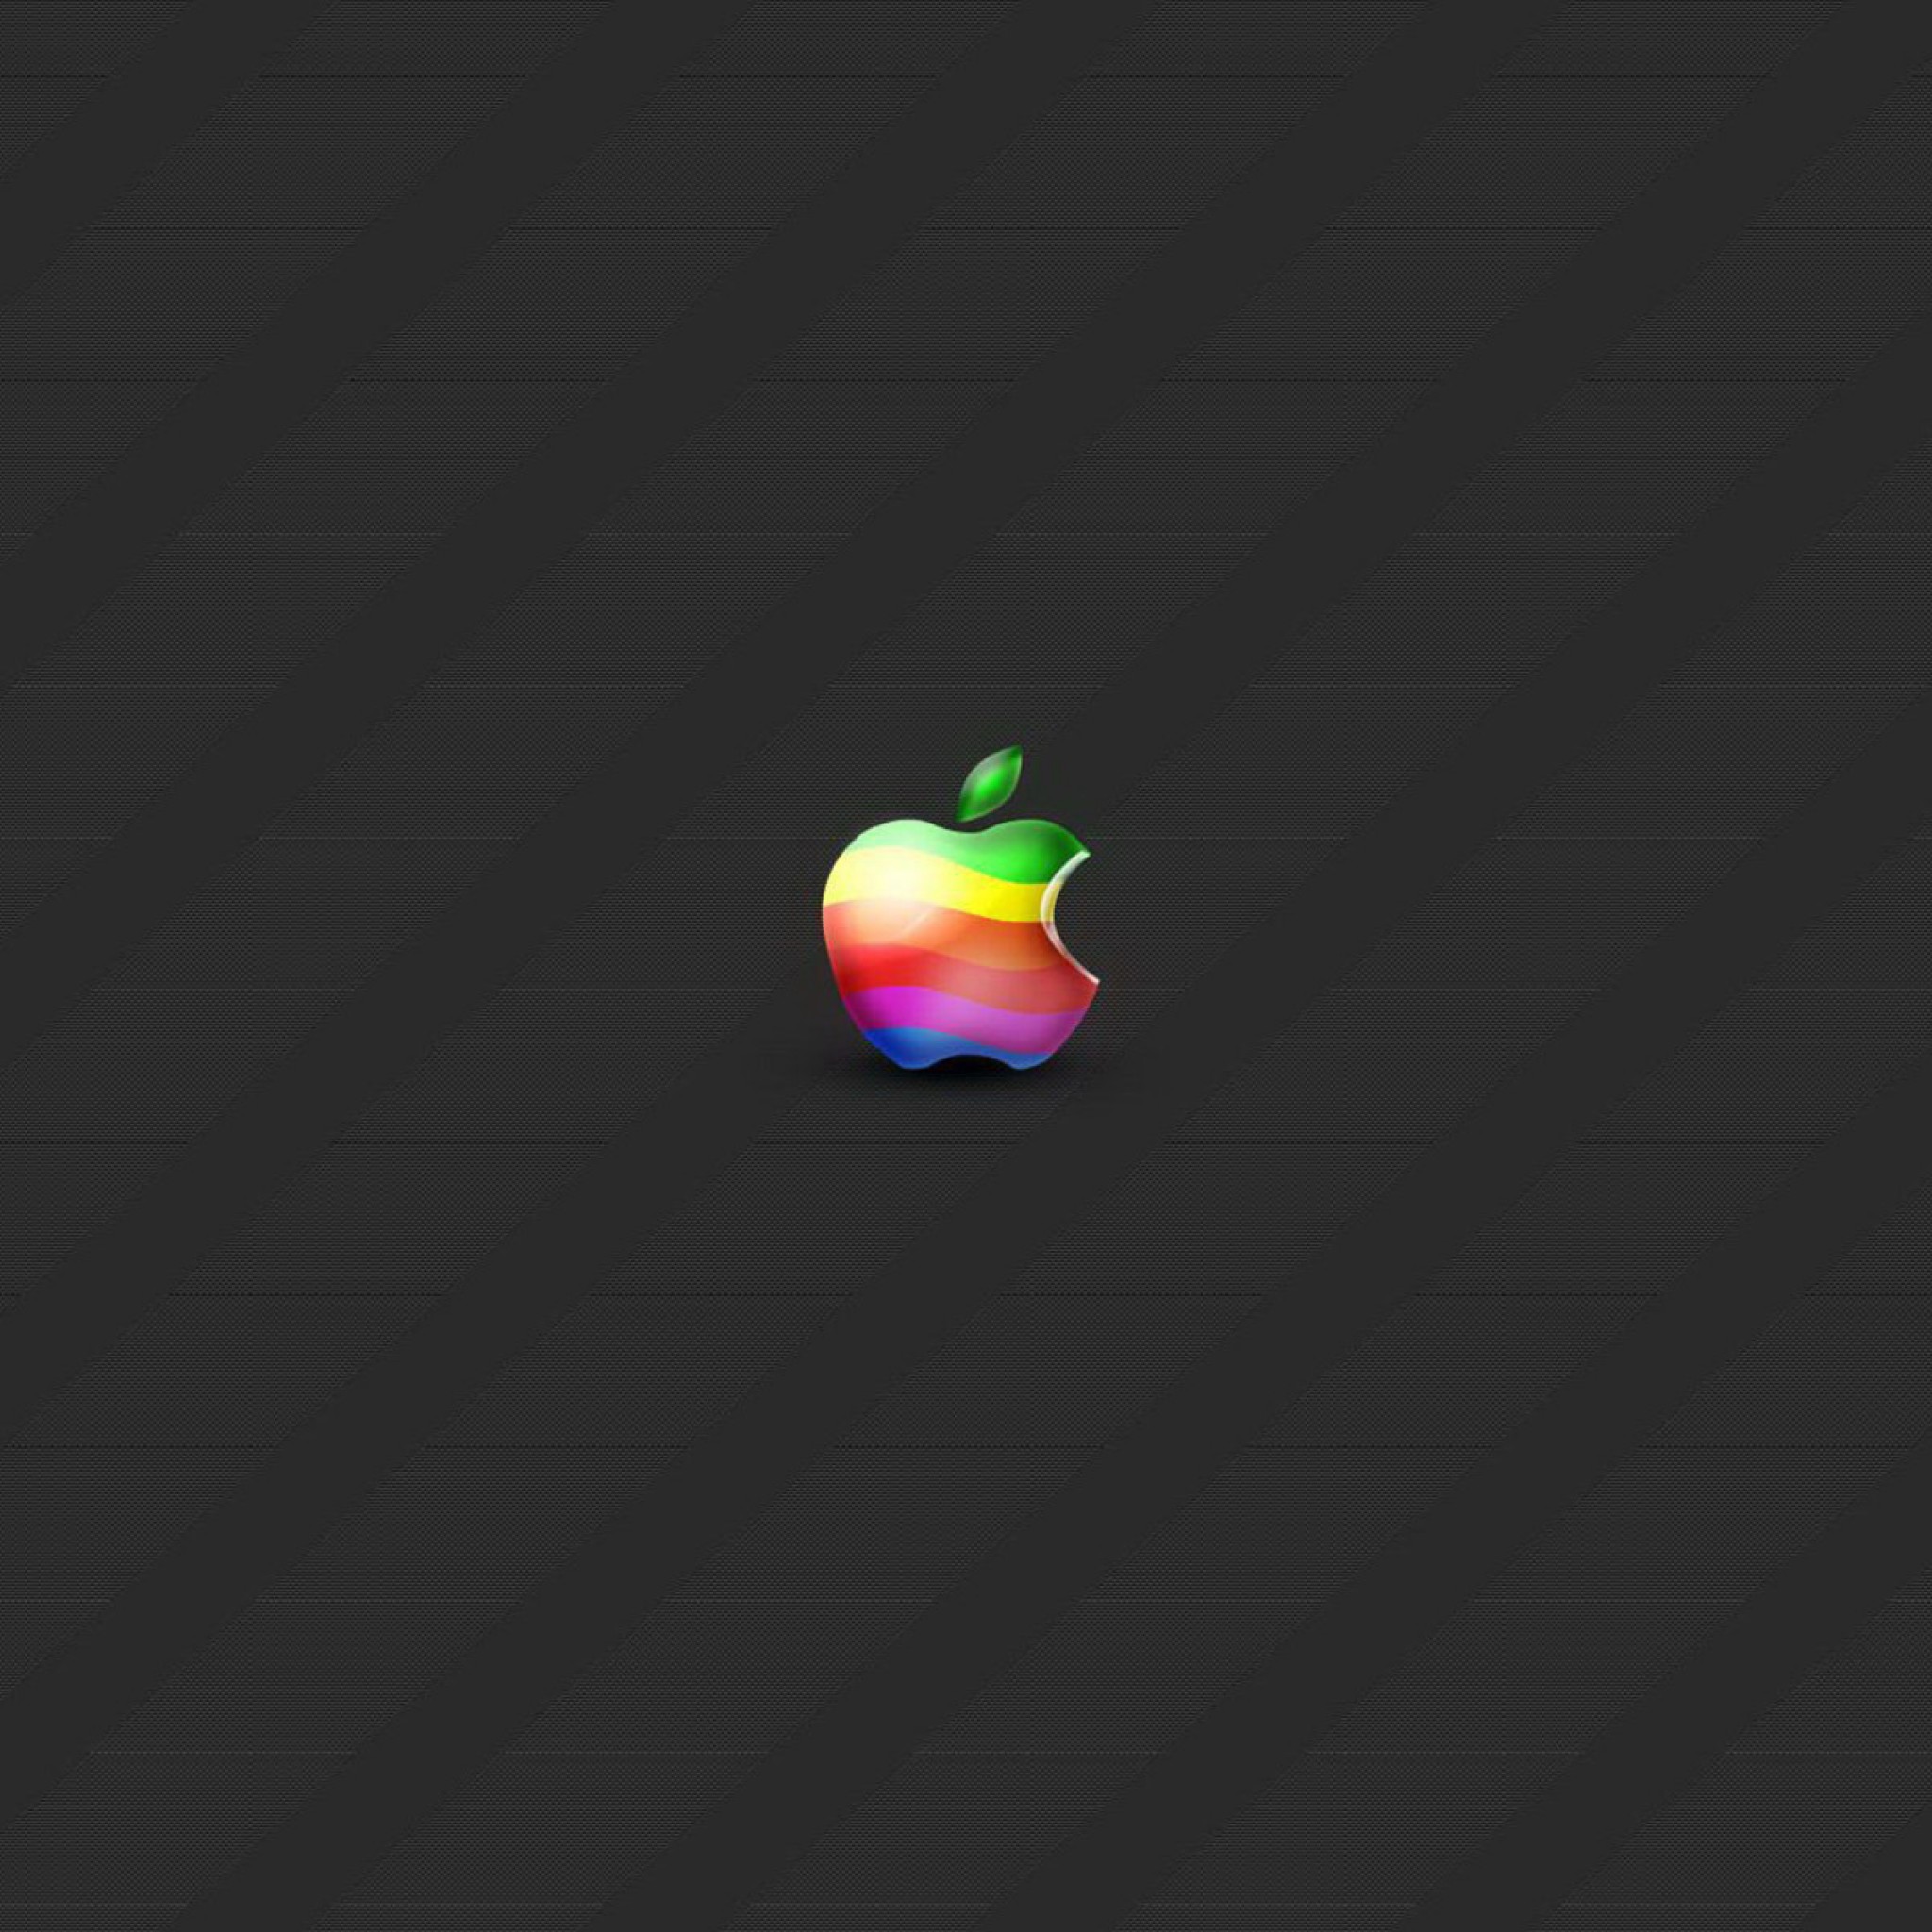 Apple Wallpaper Ipad Air 2